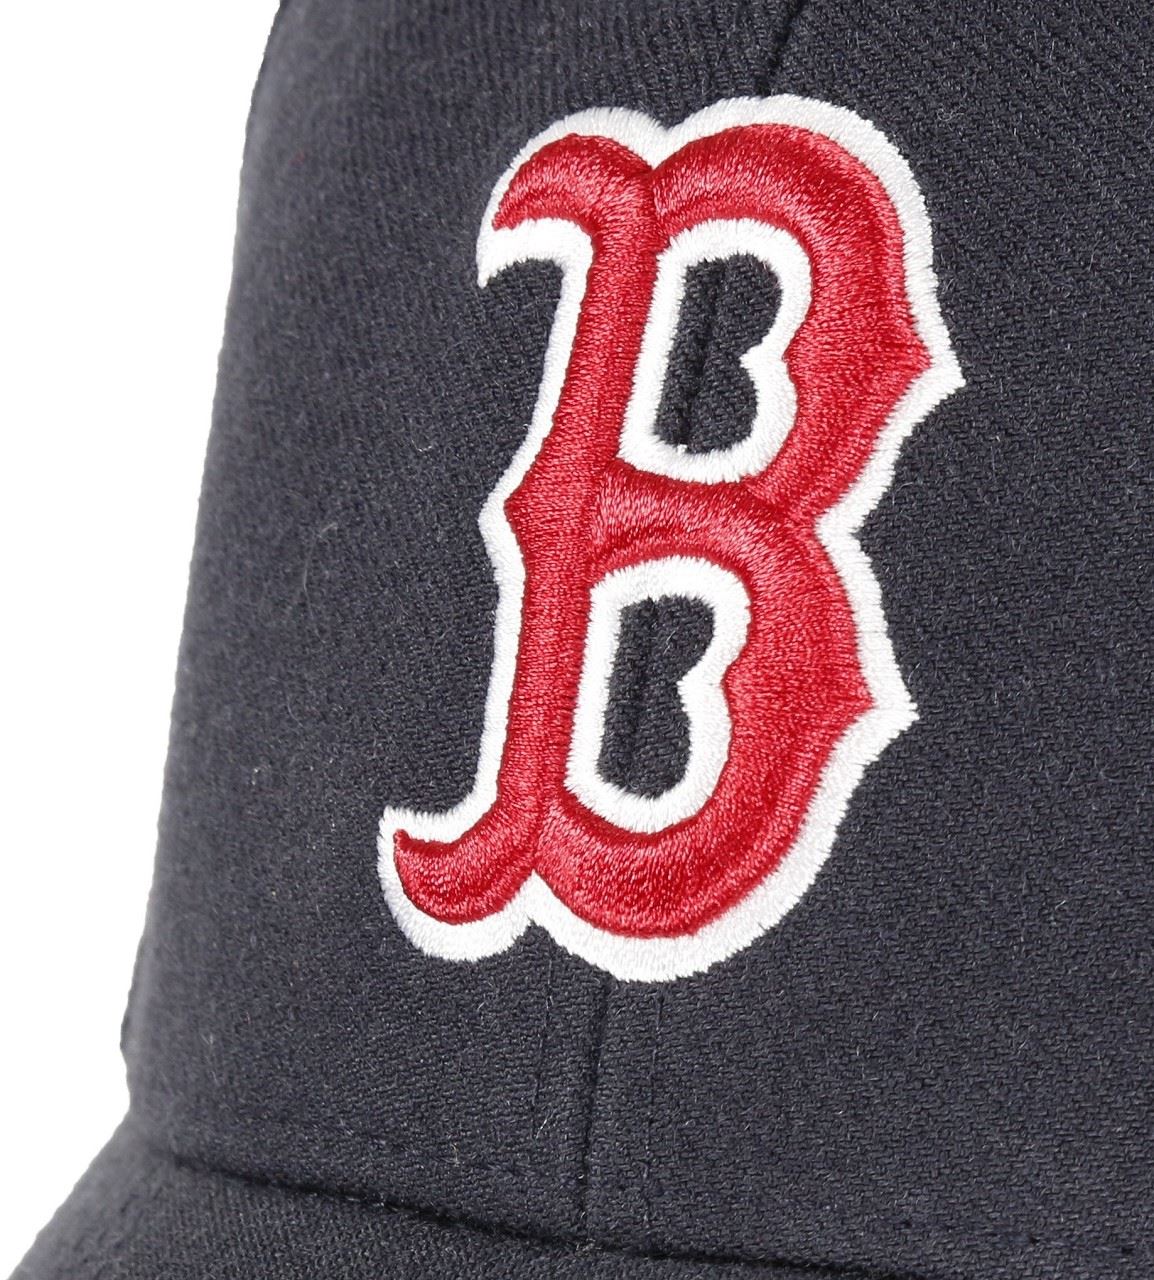 Boston Red Sox Navy MLB Most Value P. Cap '47